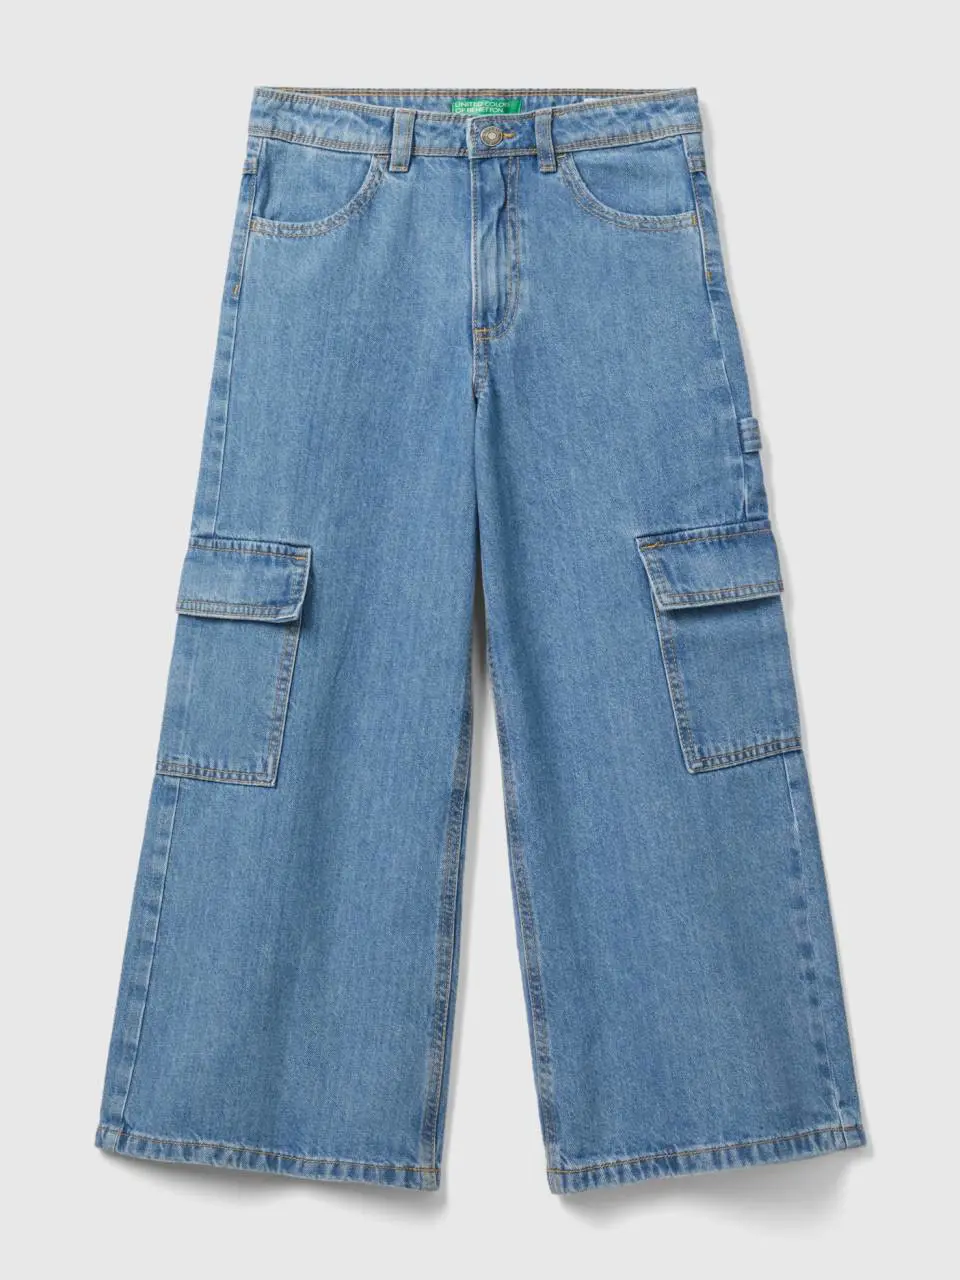 Benetton wide fit cargo jeans. 1